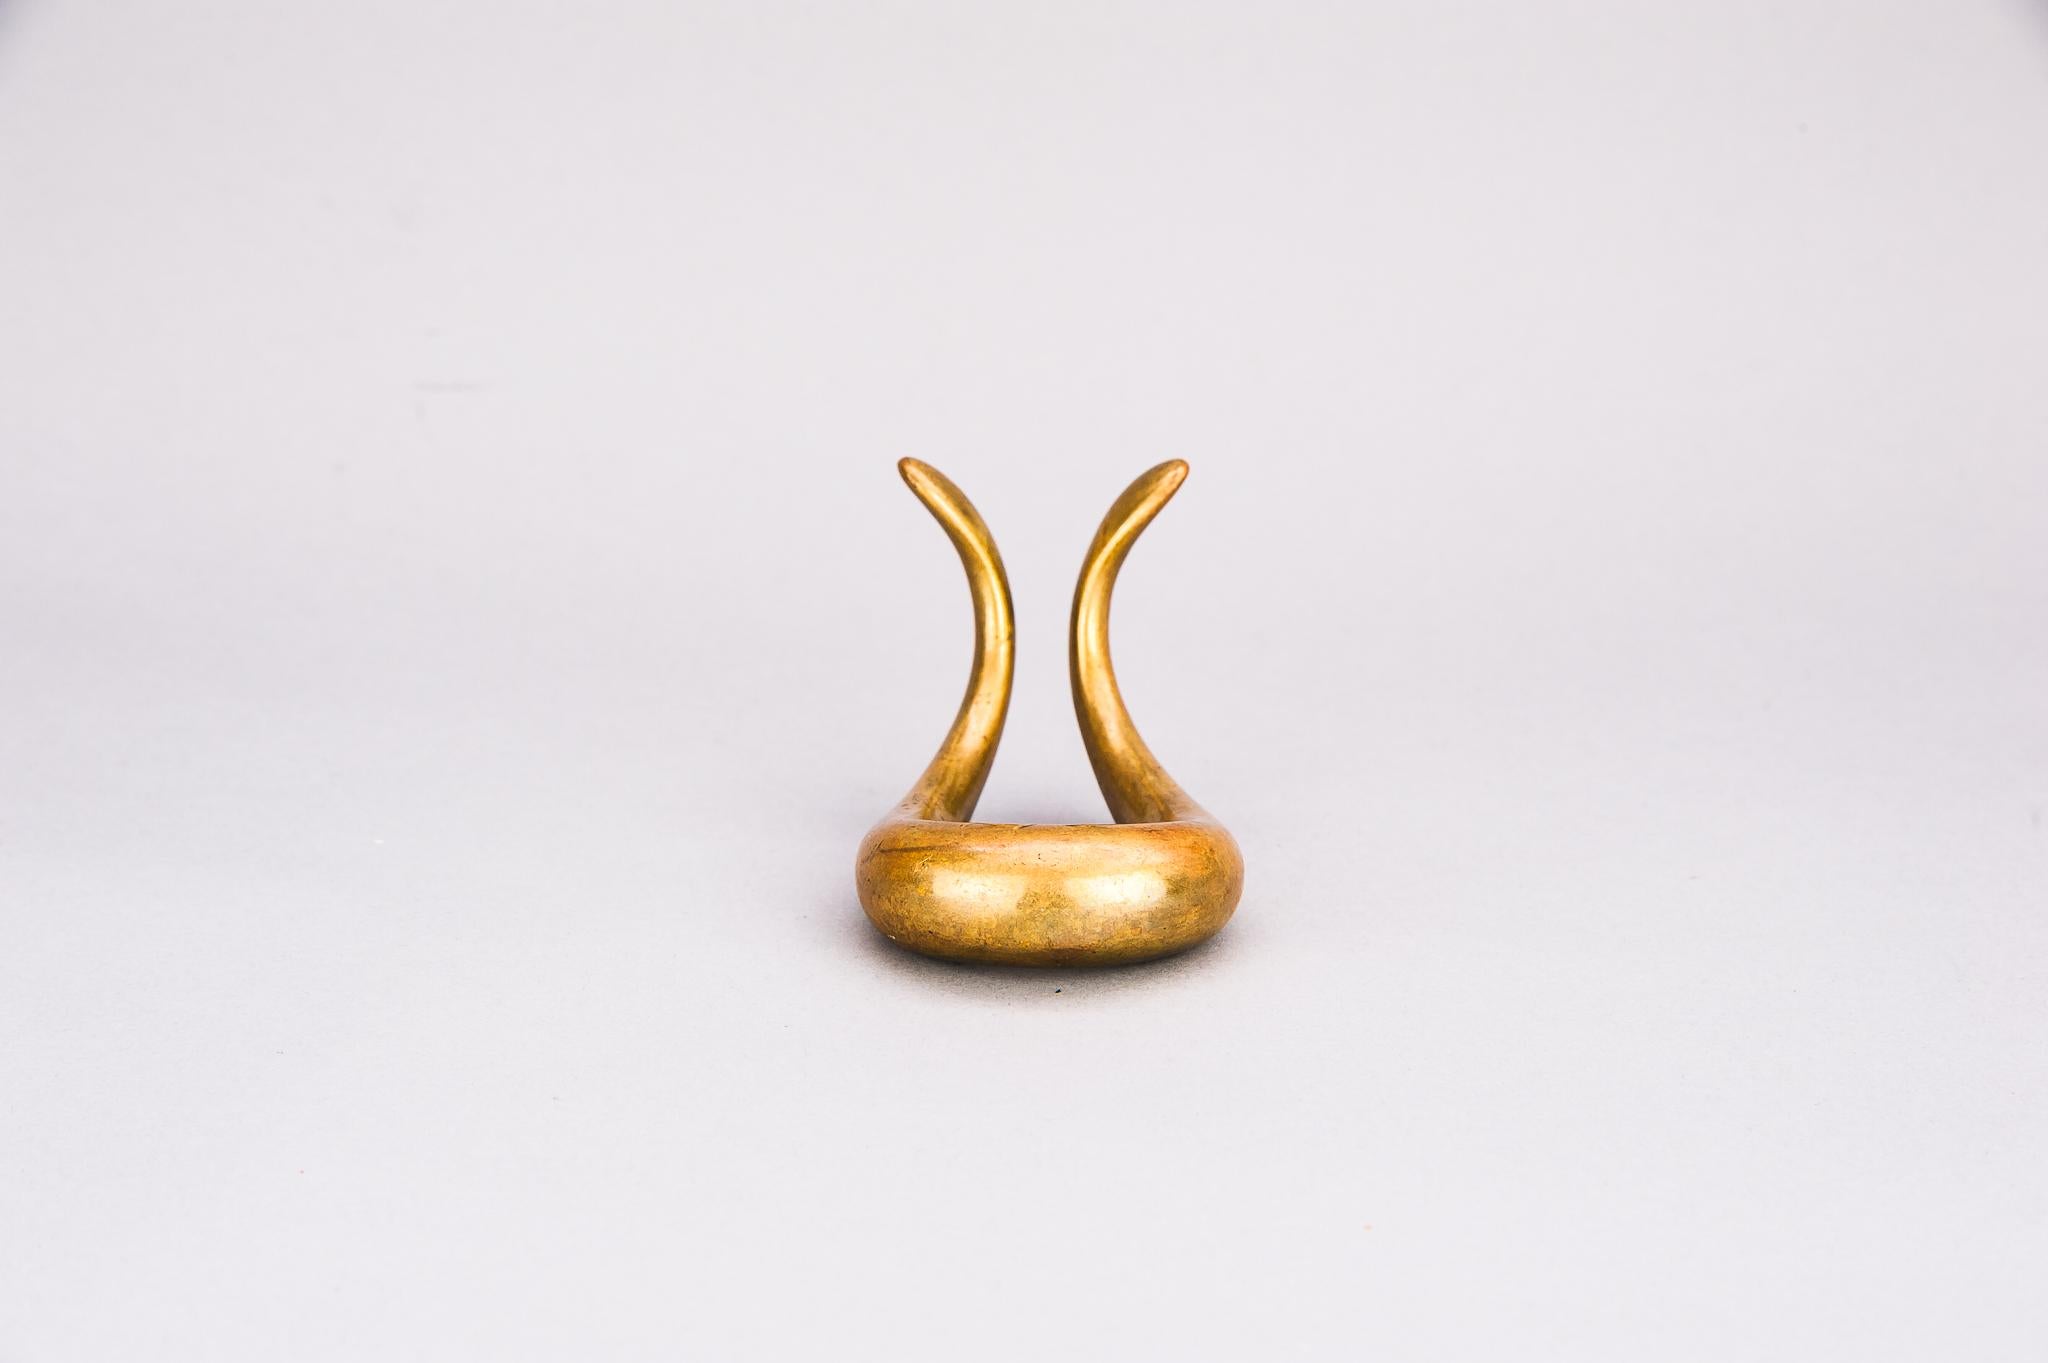 Carl Auböck brass sculptural pipe holder
Original condition.